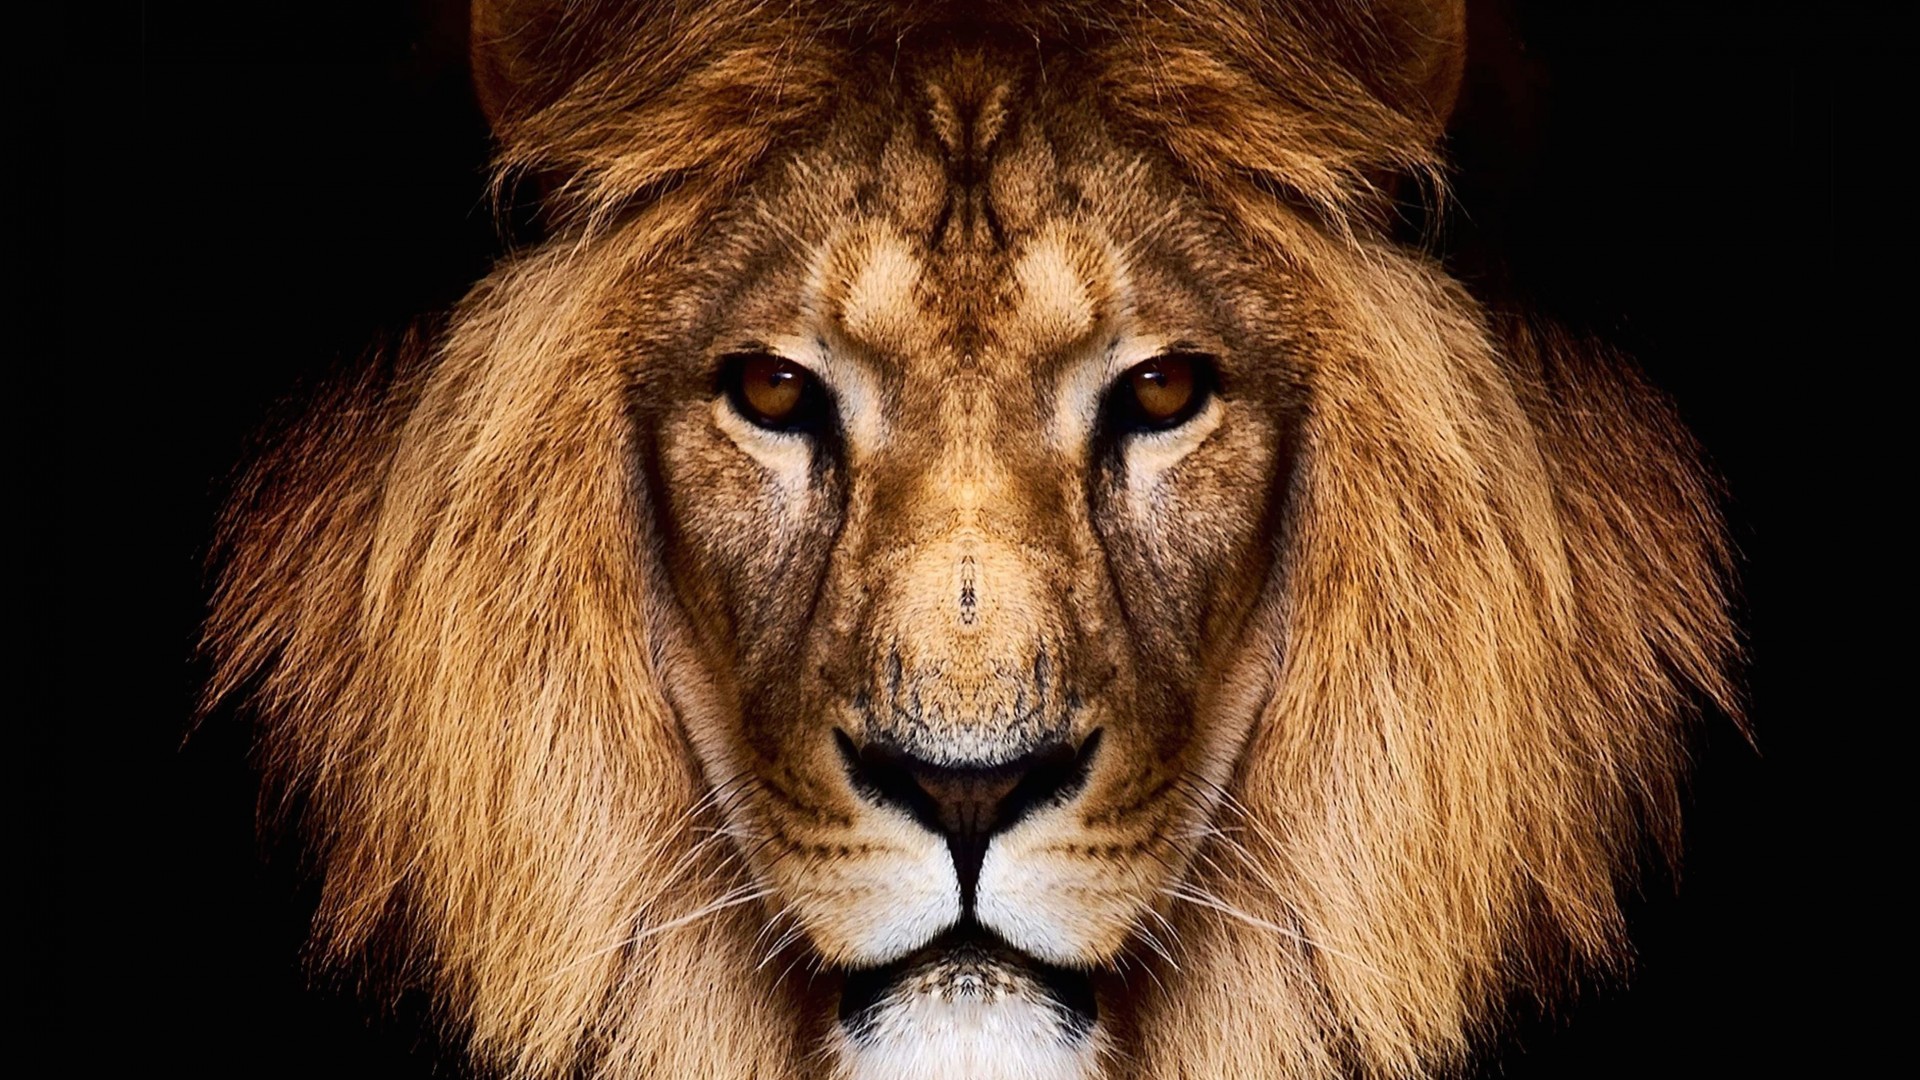 King Lion Wallpaper for Desktop 1920x1080